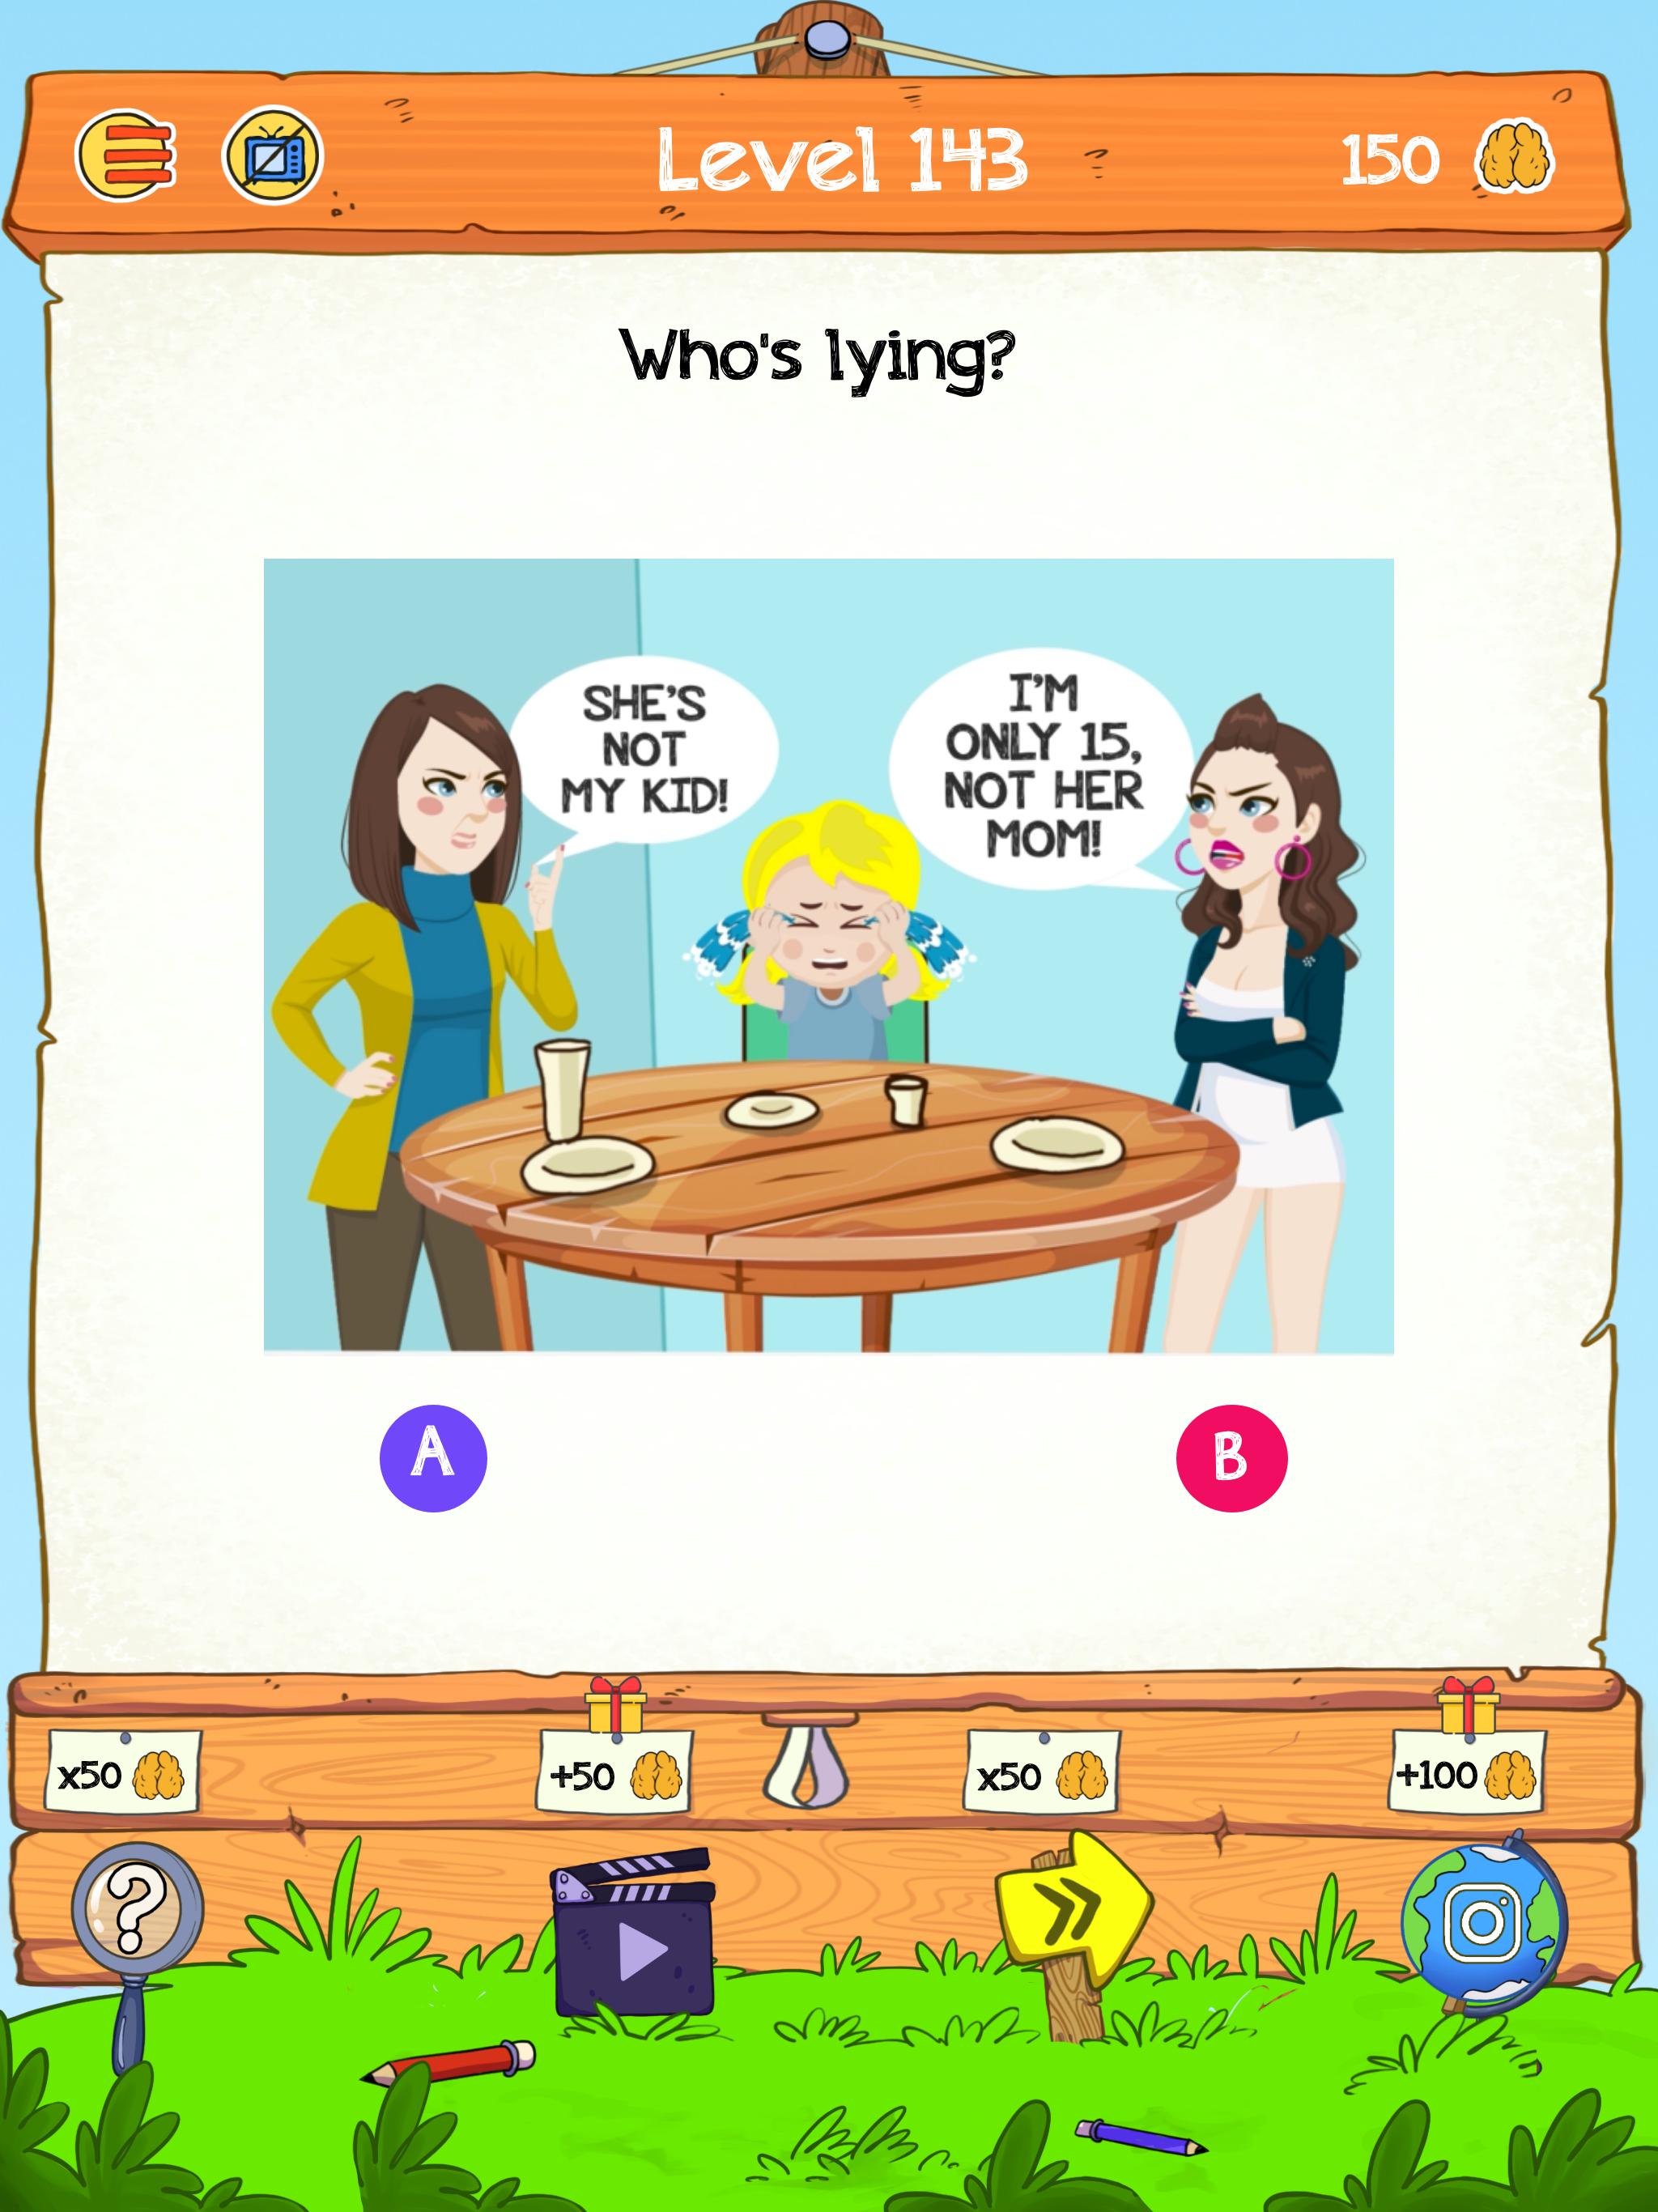 Braindom 2: Who is Lying? Fun Brain Teaser Riddles 1.2.8 Screenshot 10